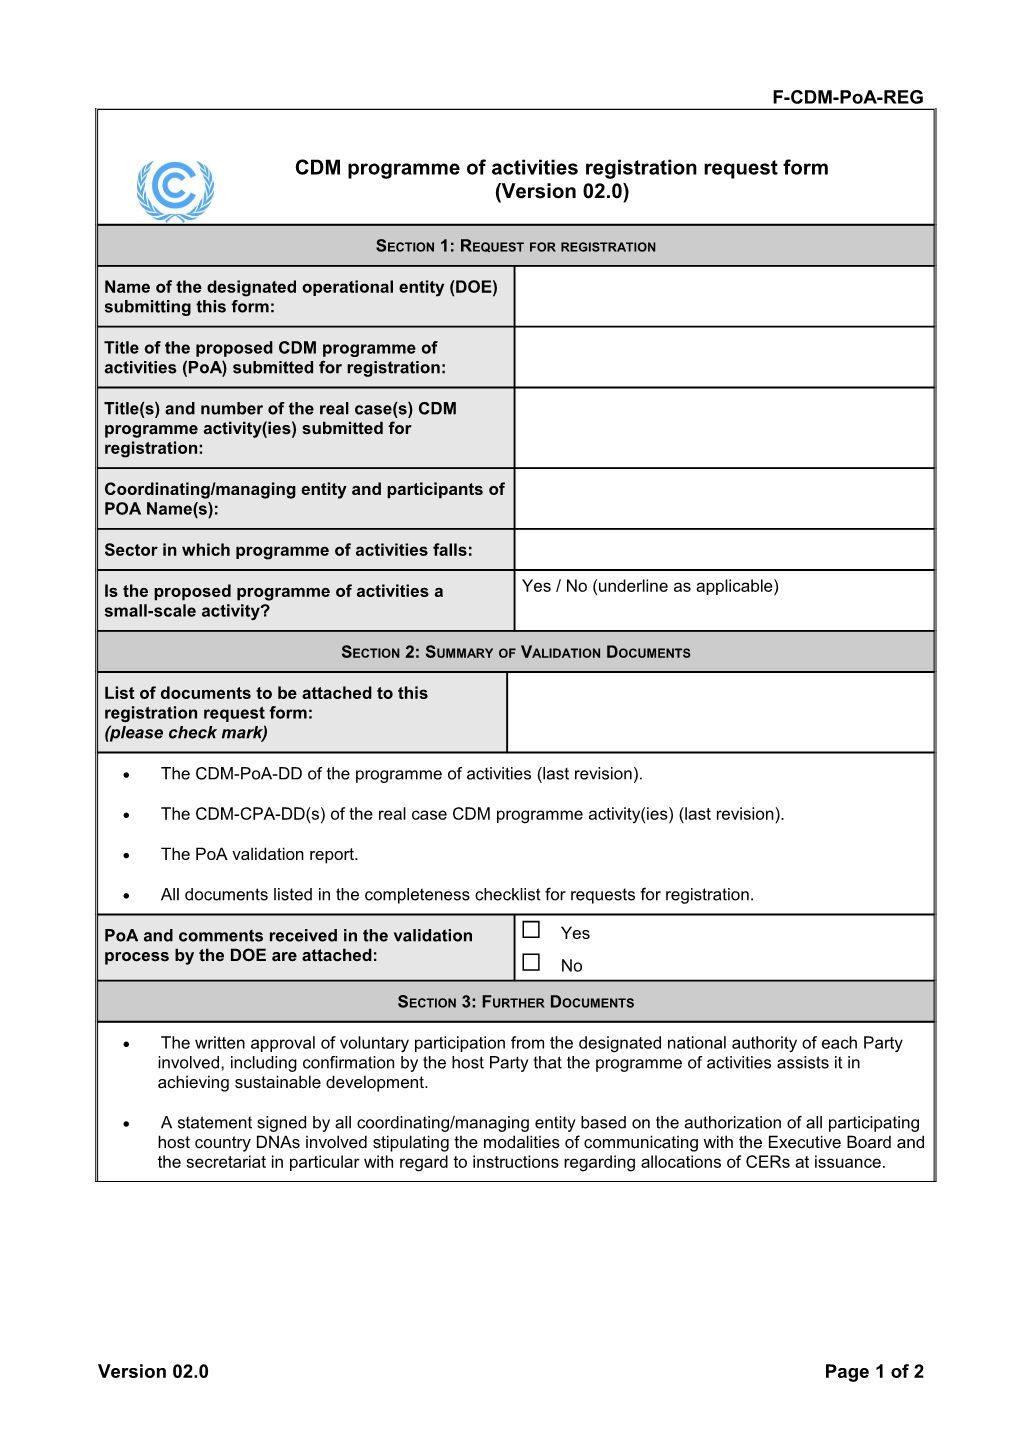 F-CDM-Poa-REG: CDM Programme of Activities Registration Request Form. Version 02.0